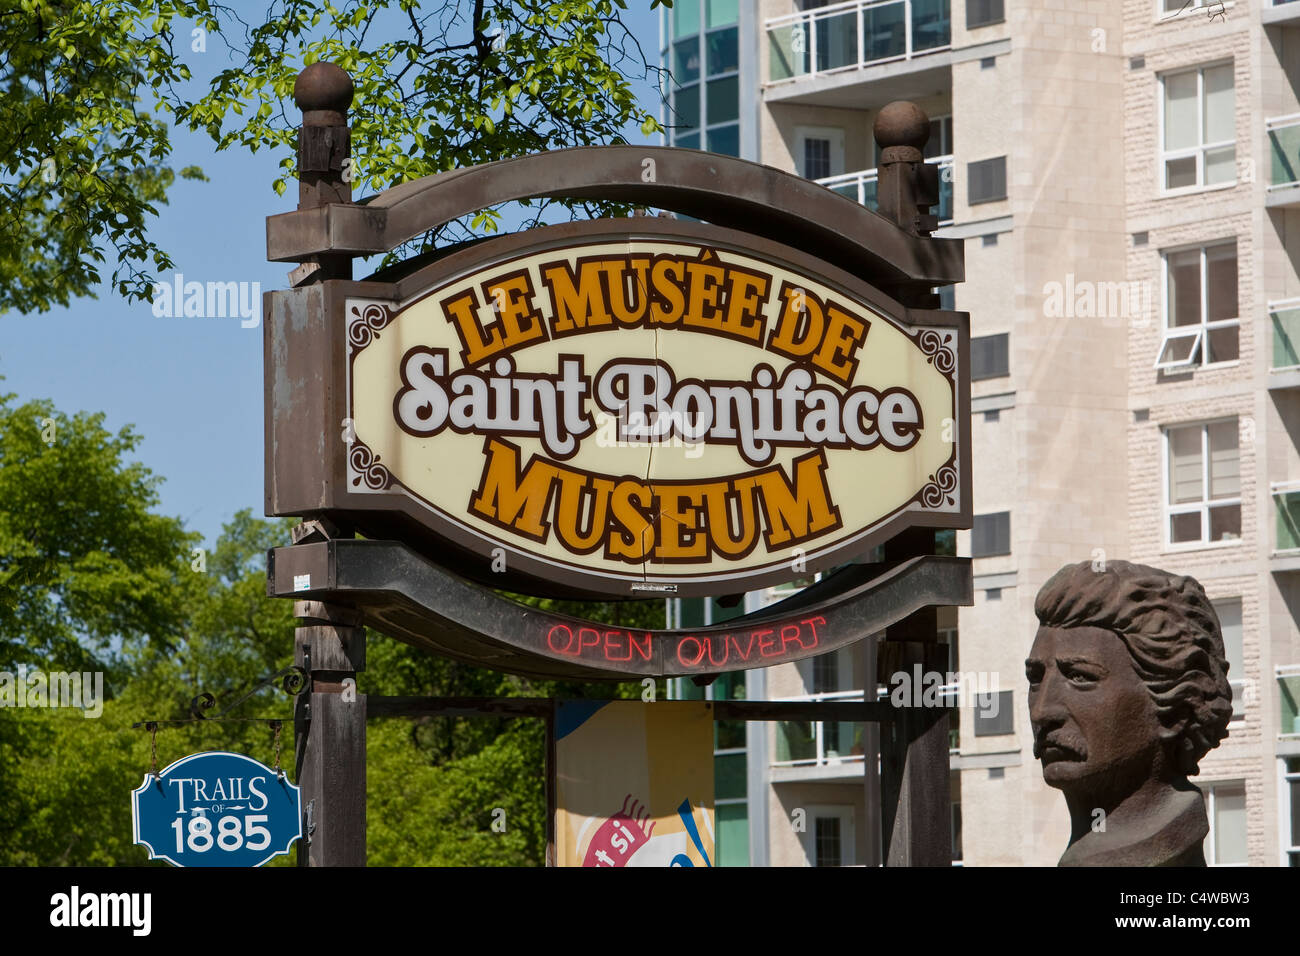 Le Musee de Saint Bonniface Museum è raffigurato in Winnipeg Foto Stock